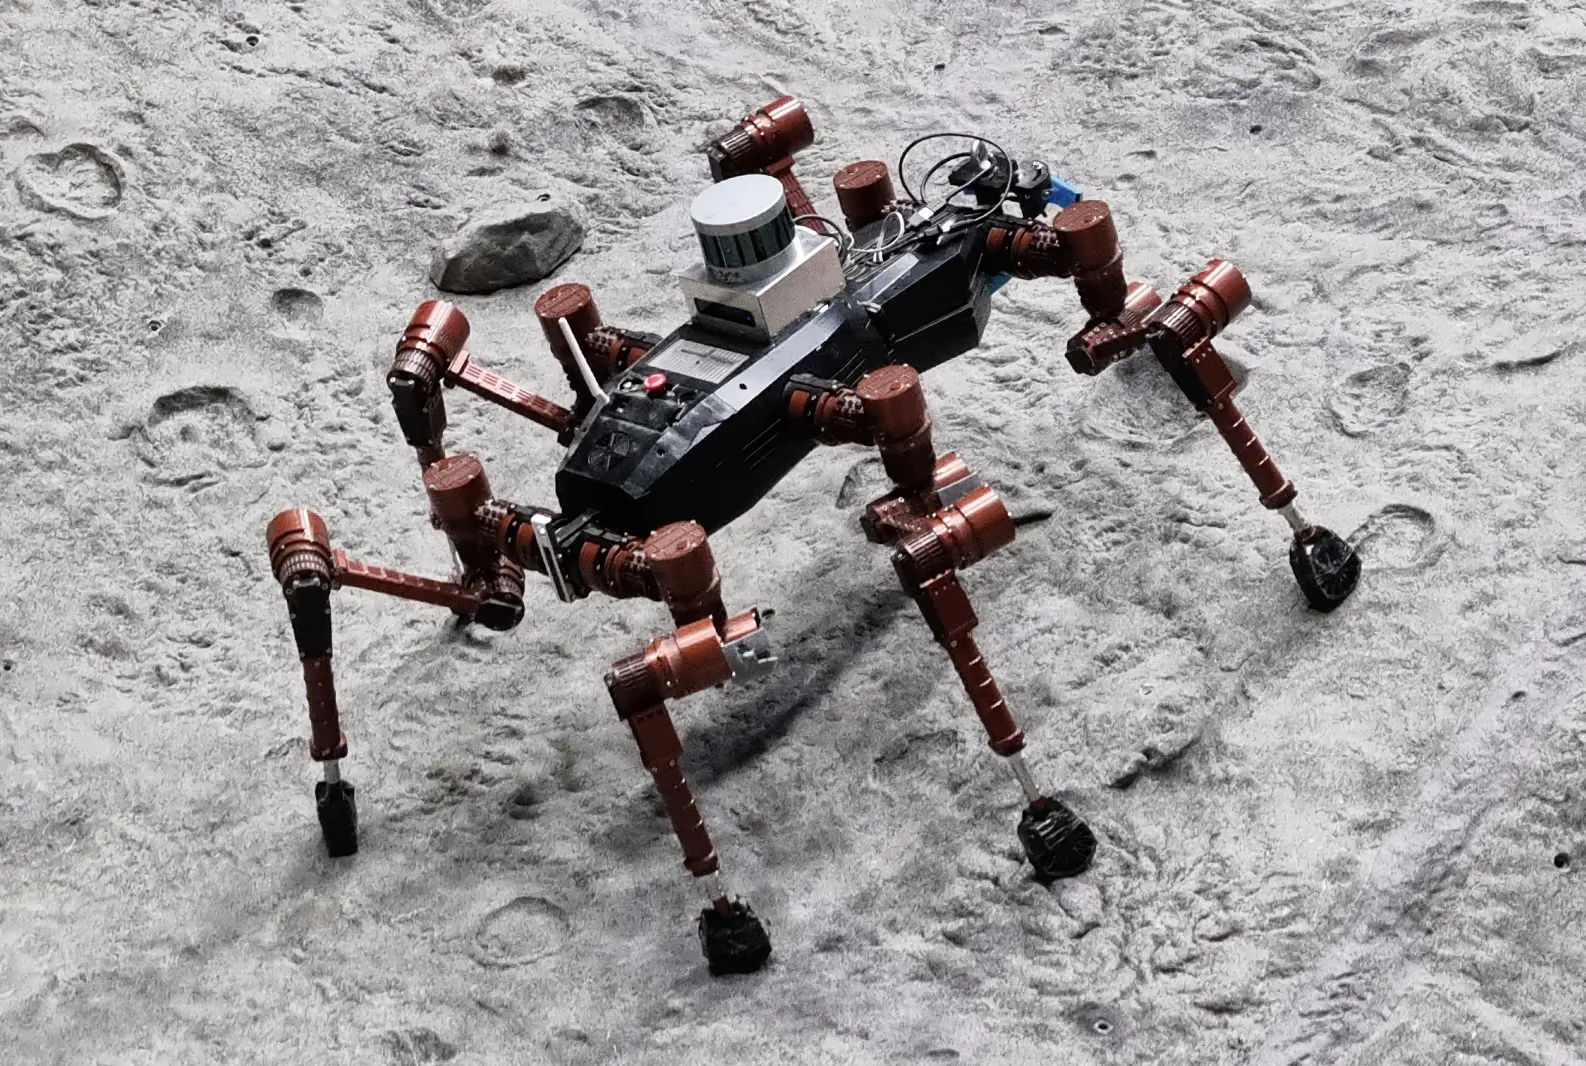 Vamex3 Autonomously exploring mars with a heterogeneous robot swarm